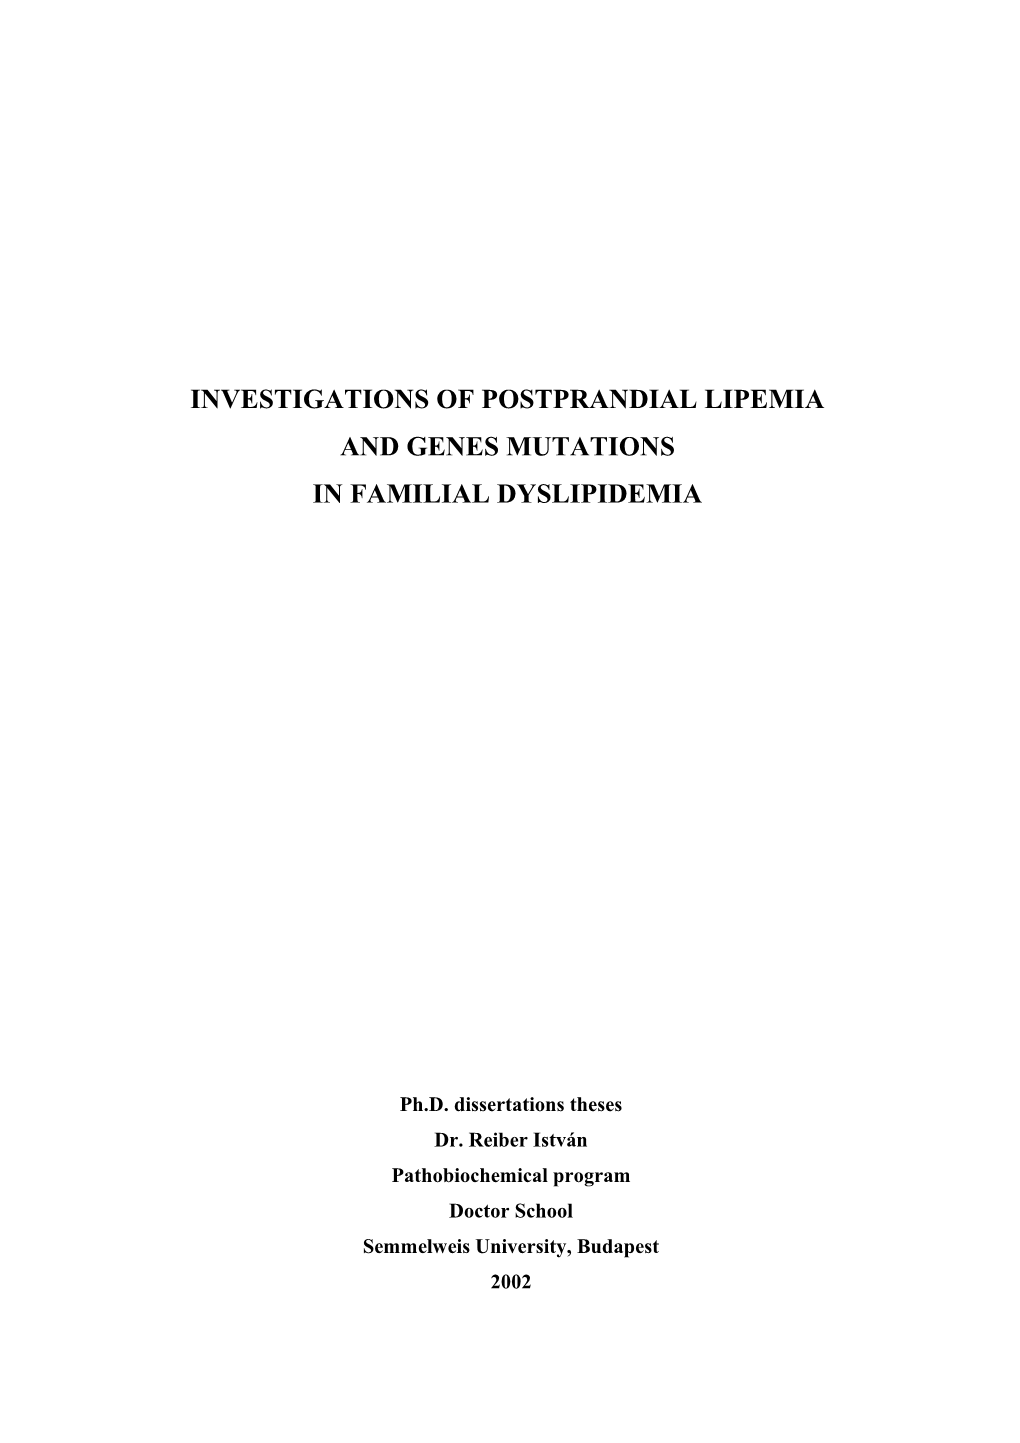 Investigations of Postprandial Lipemia